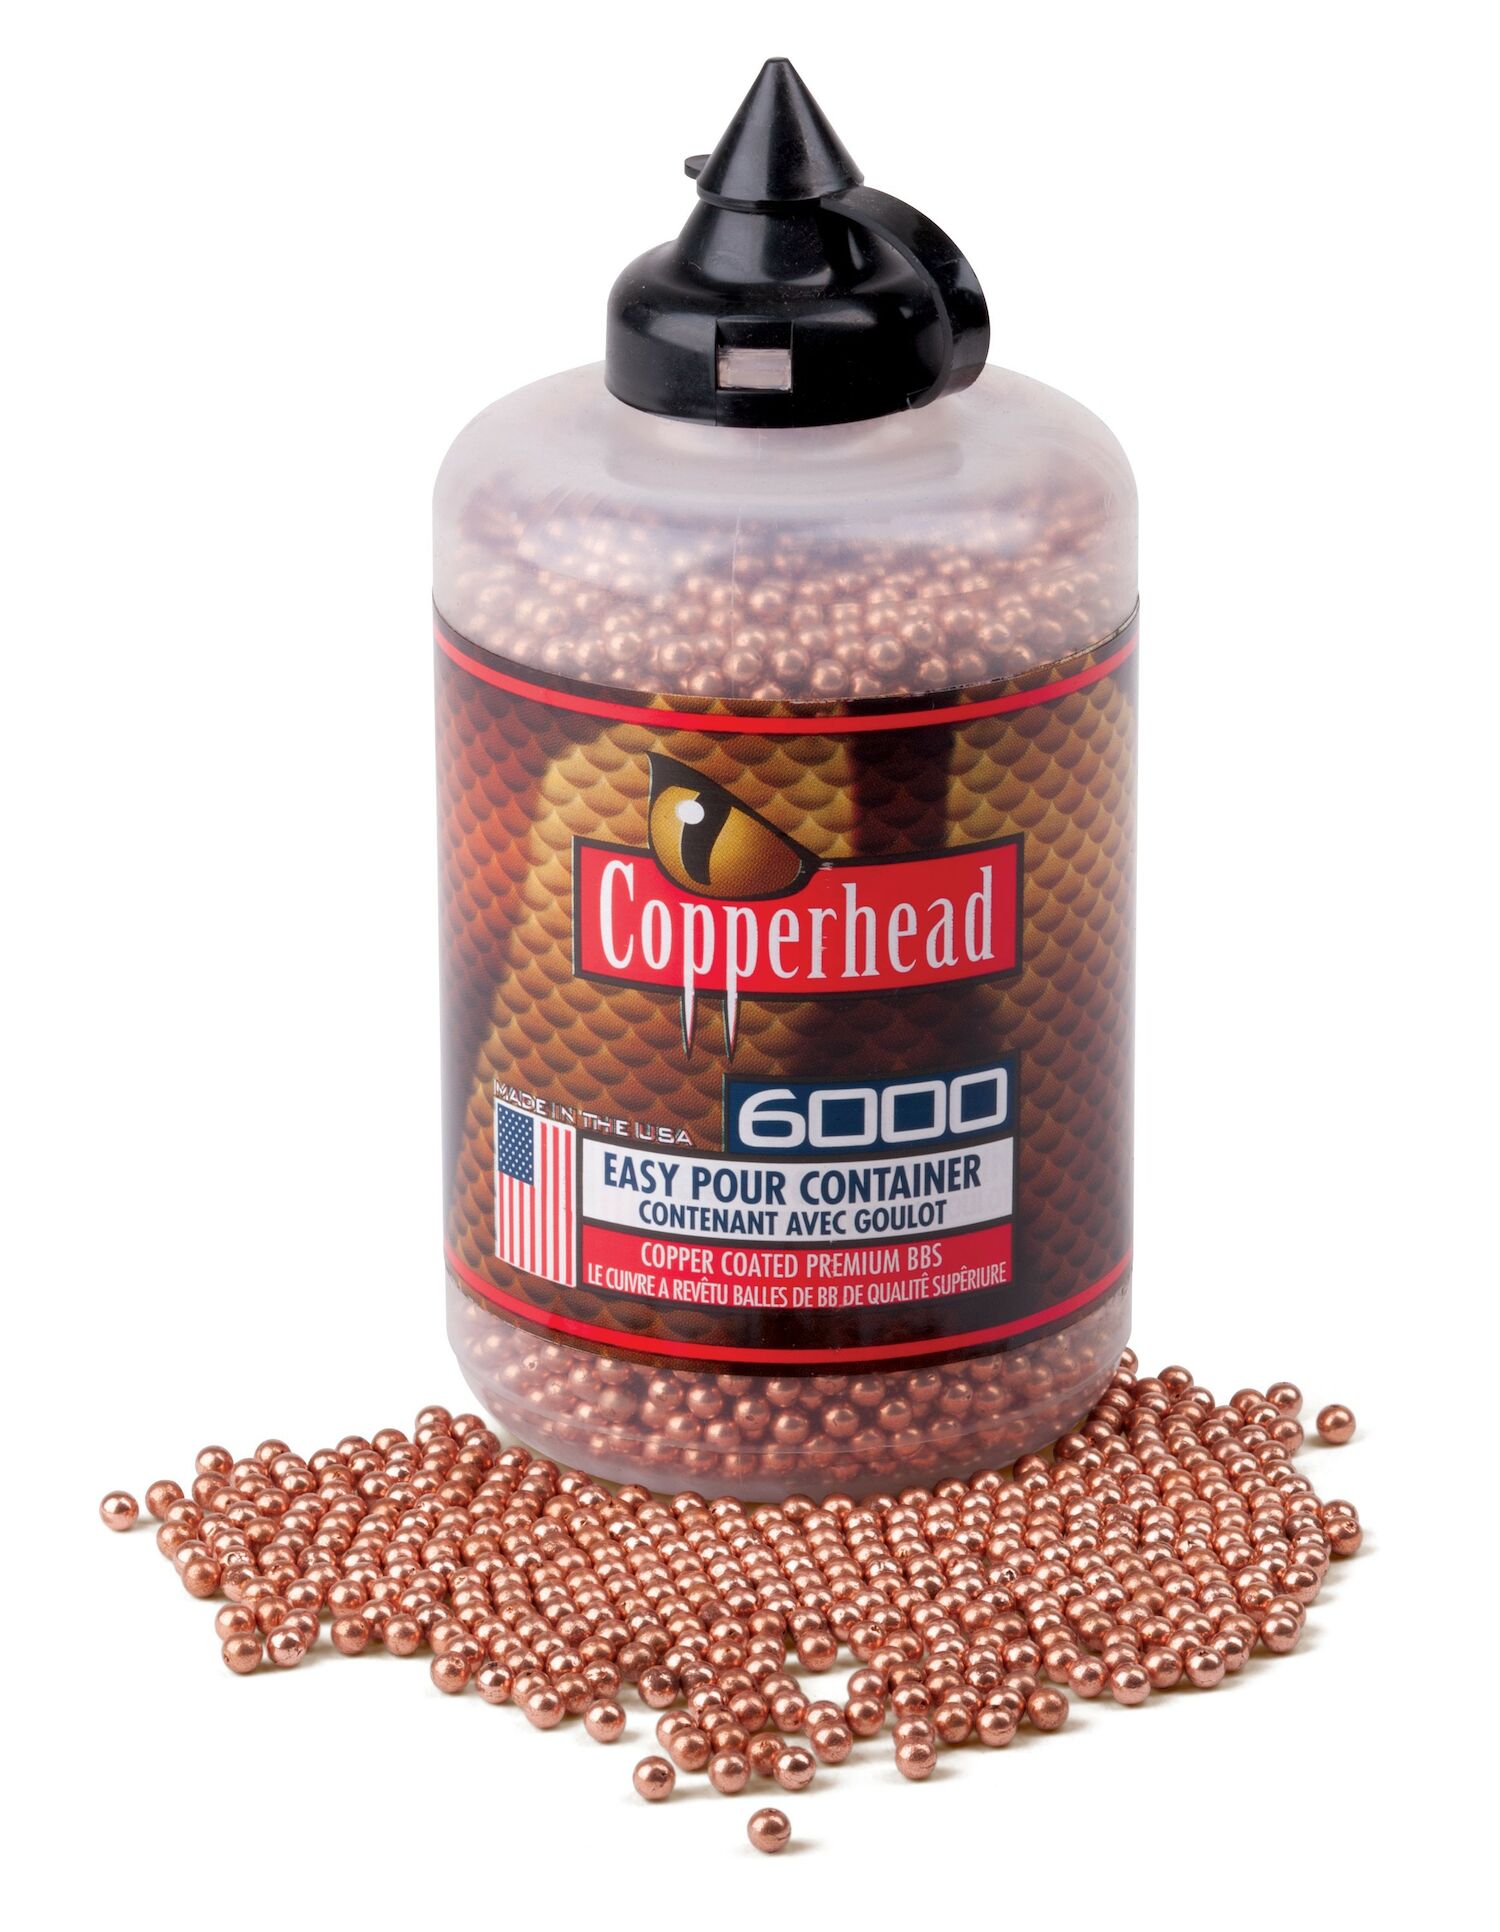 Copperhead BBs (6000CT)